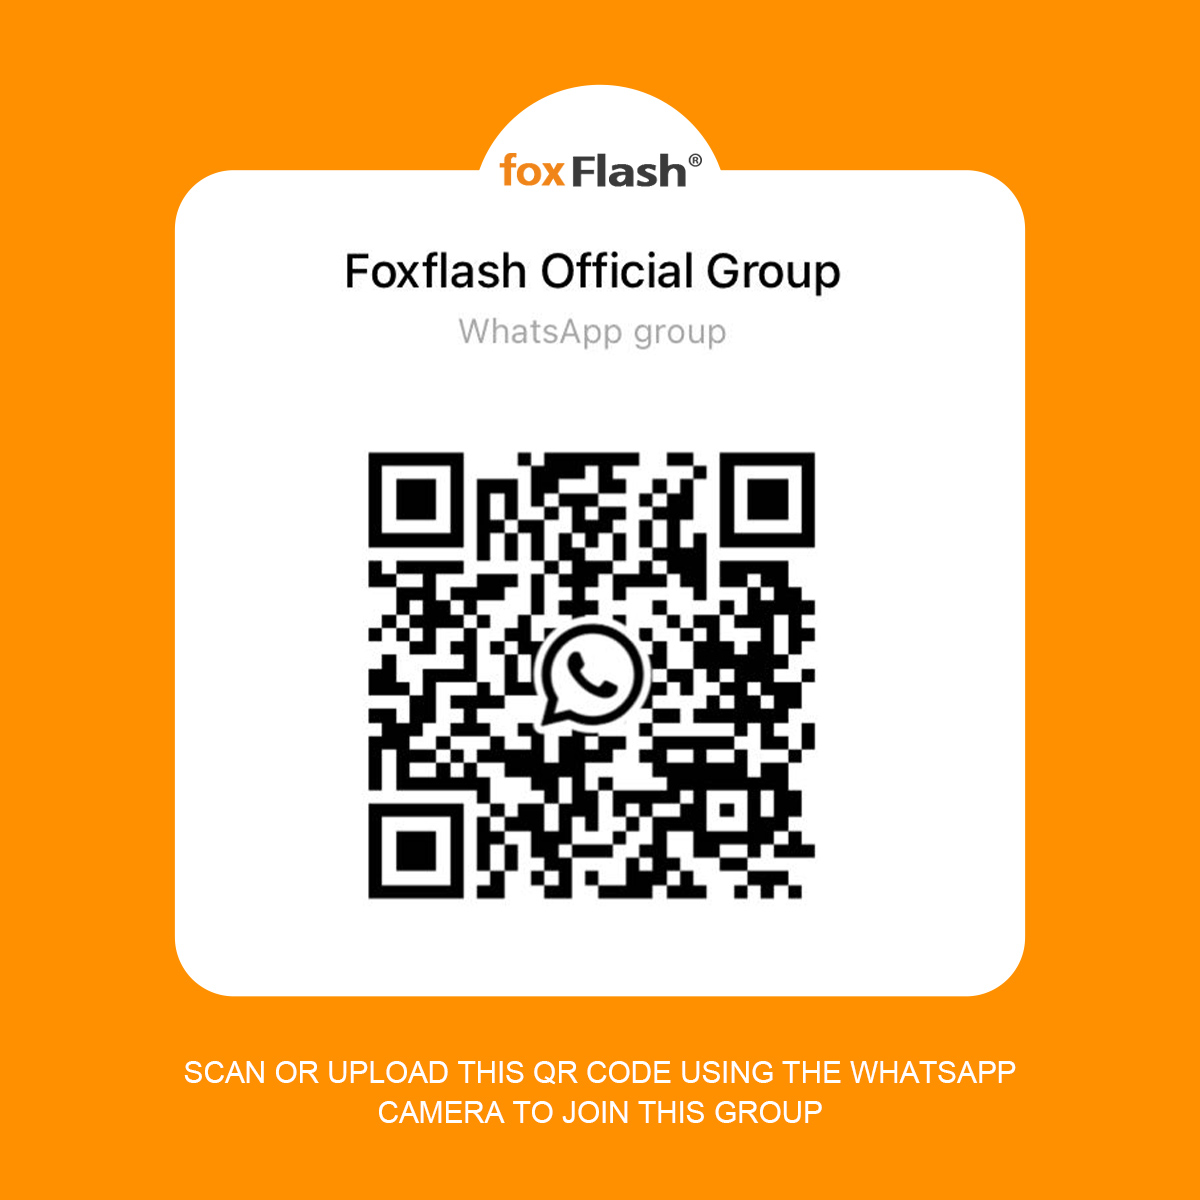 FoxFlash Official Group